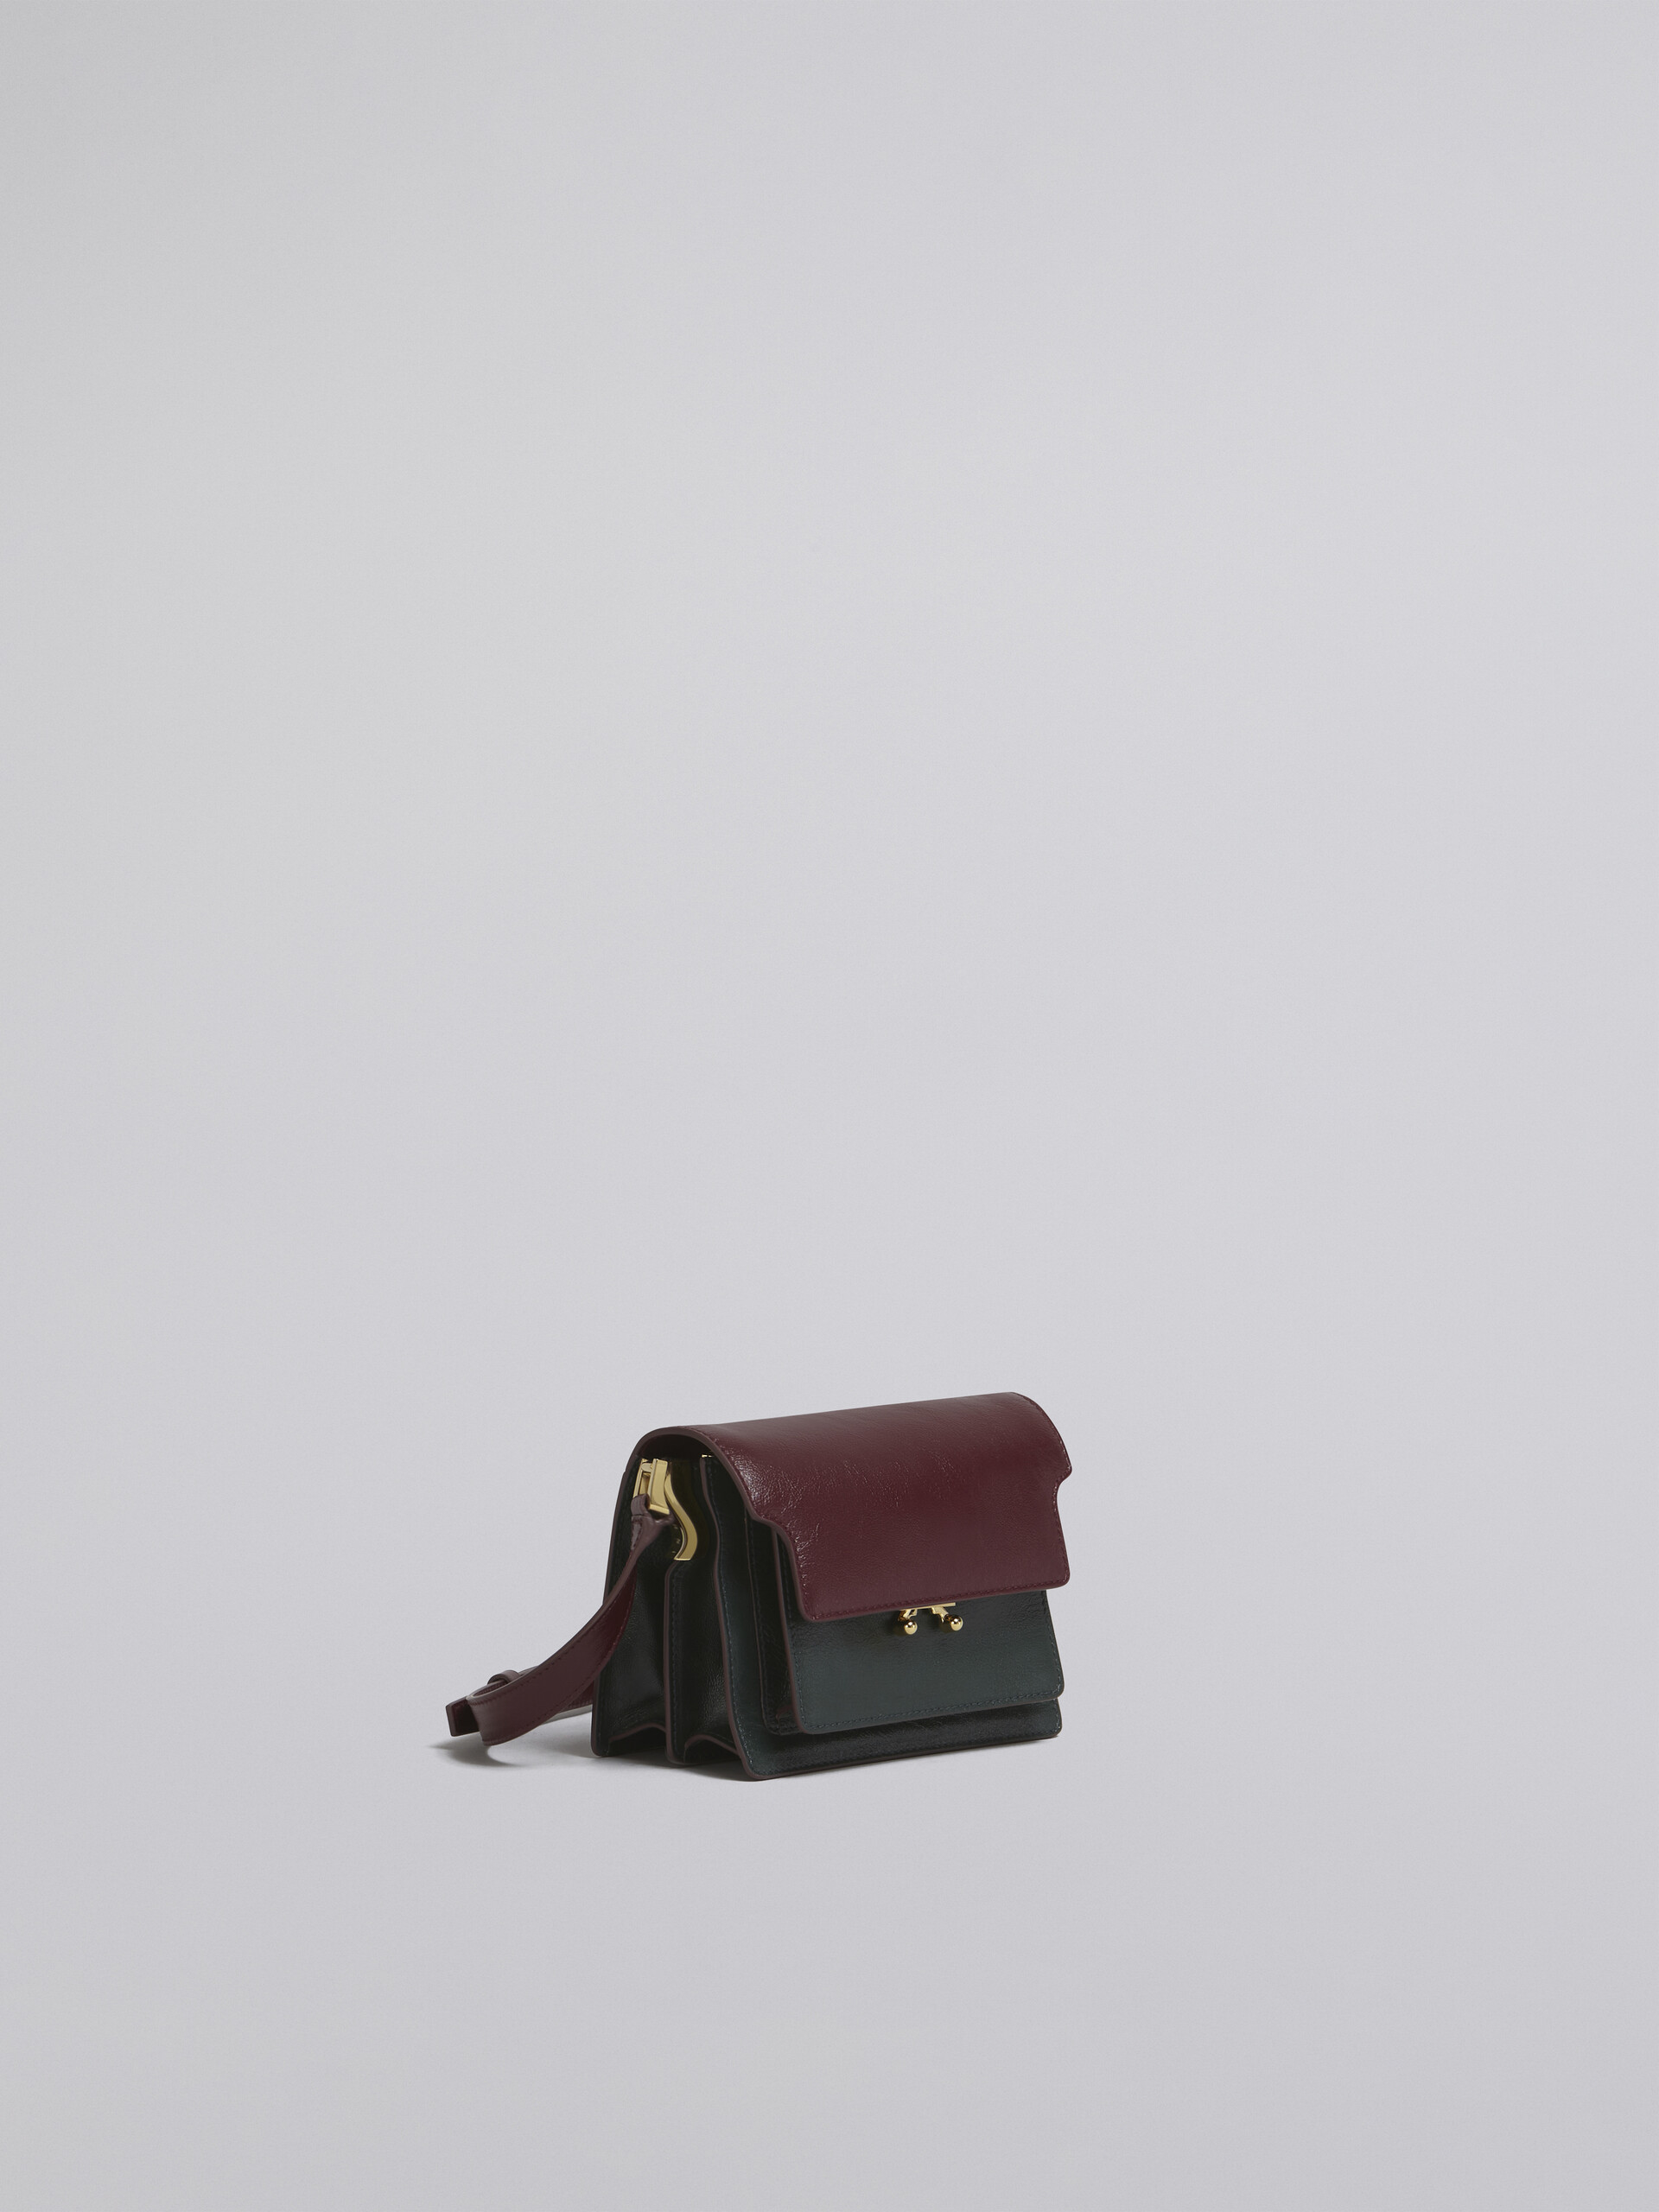 TRUNK SOFT bag in green and burgundy tumbled calf - Shoulder Bag - Image 4